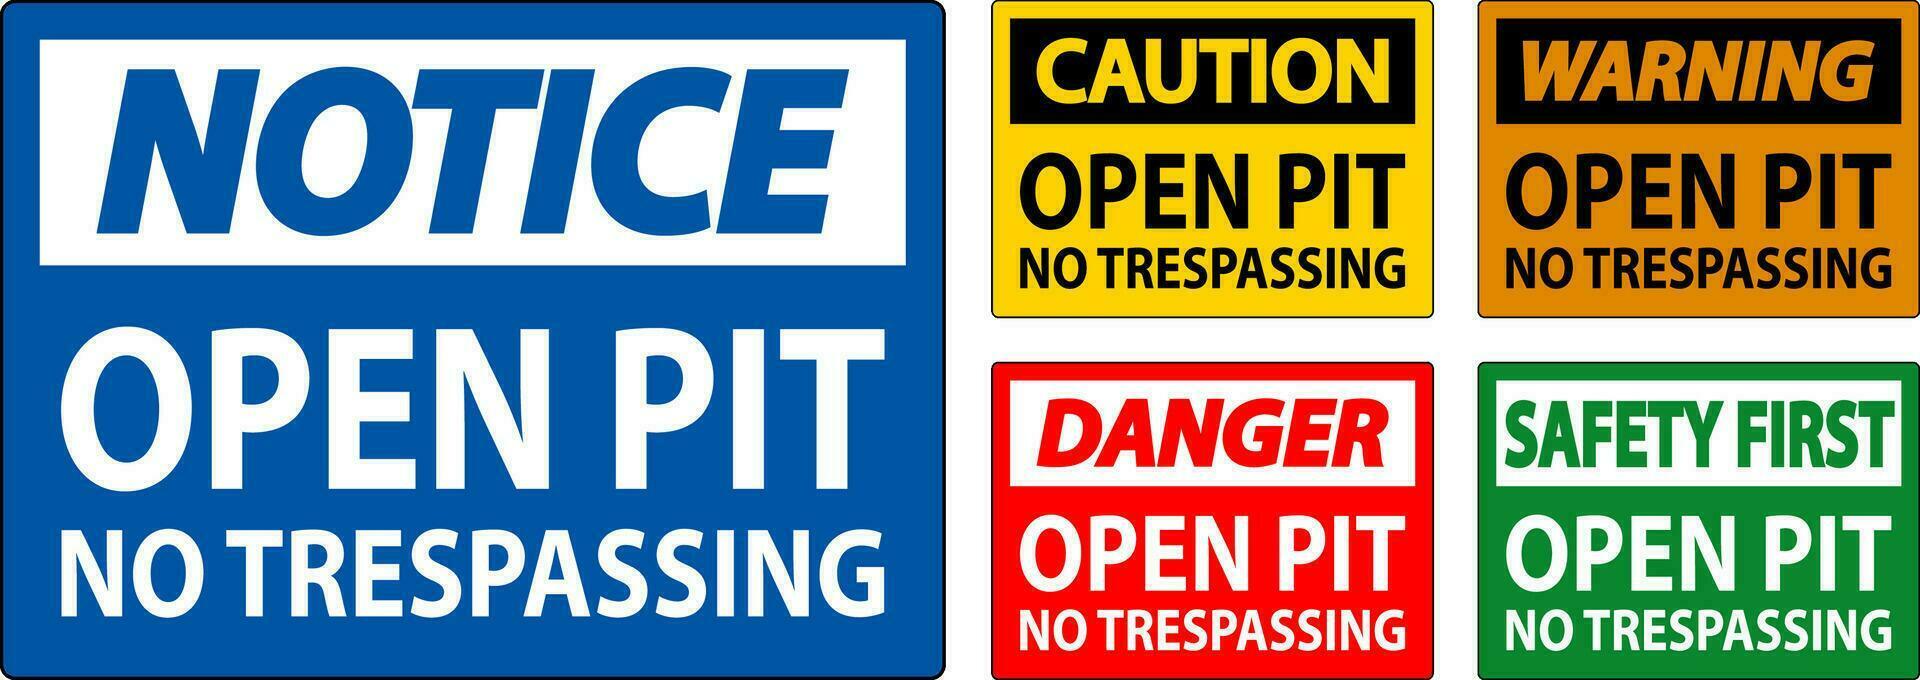 Danger Sign Open Pit - No Trespassing vector